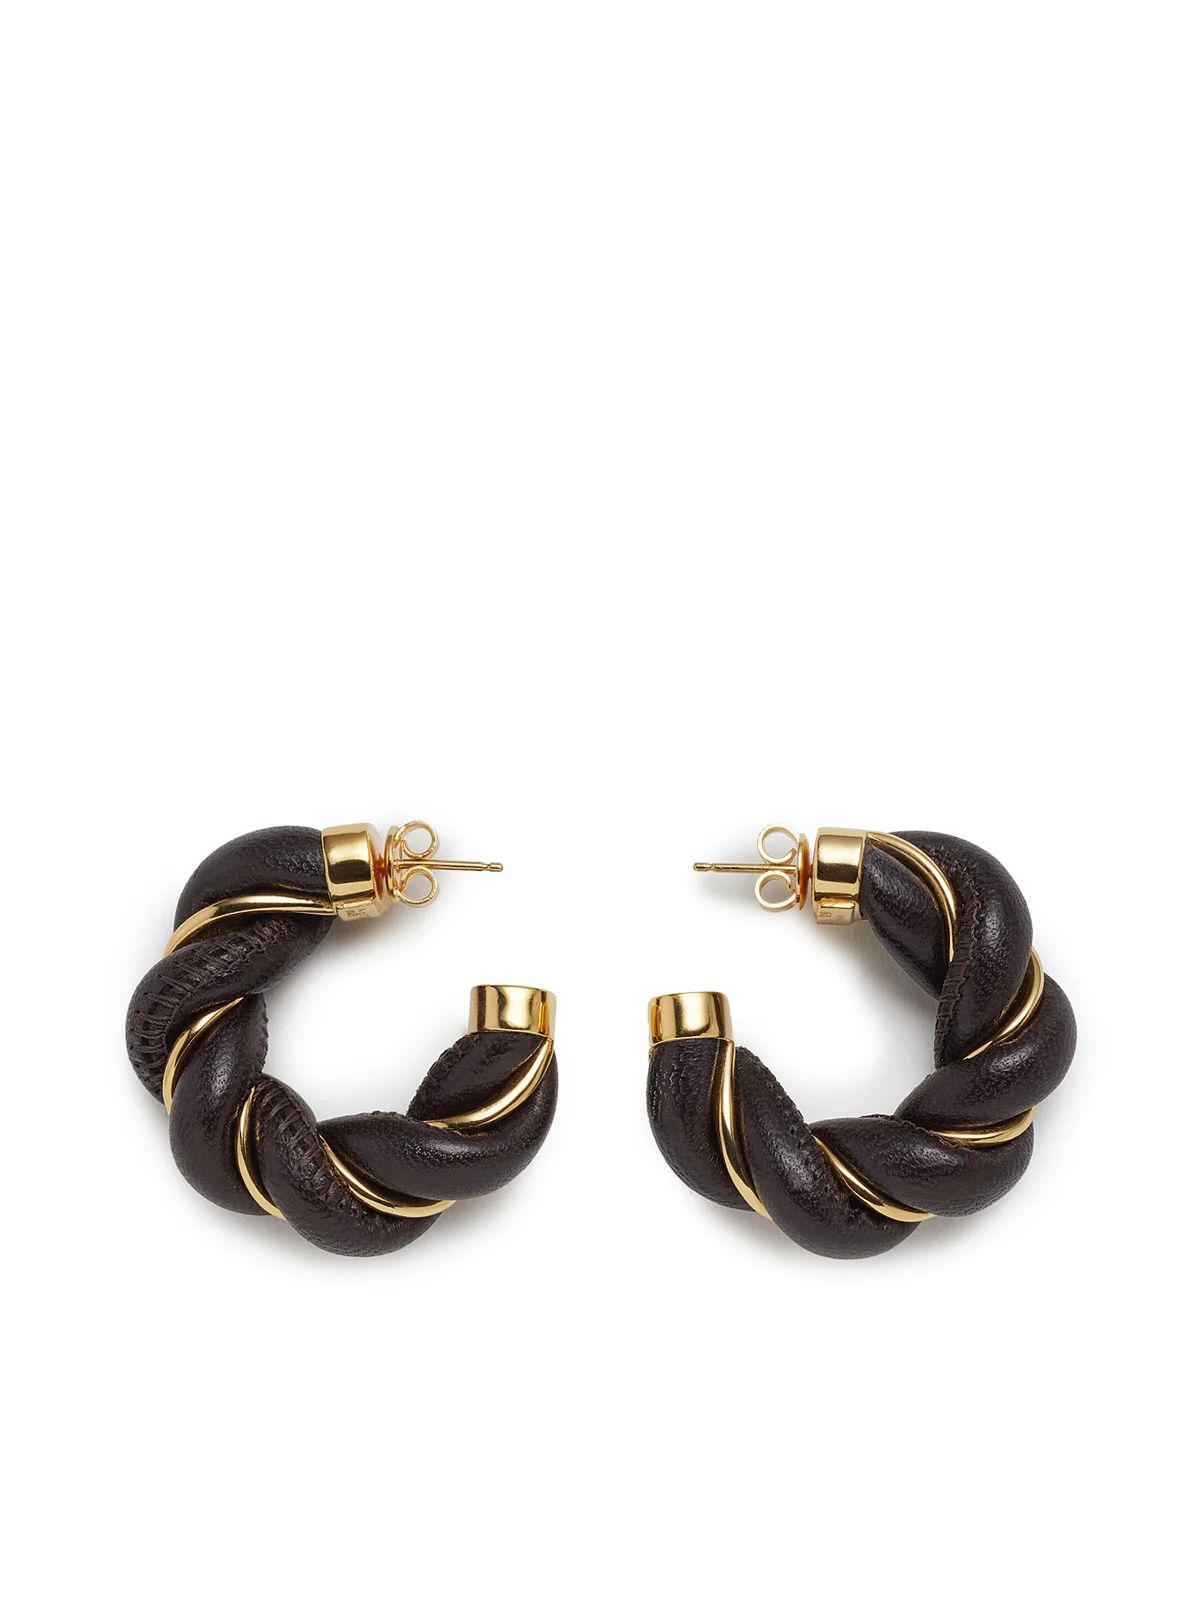 Bottega Veneta Interwoven Hoop Earrings | Cettire Global